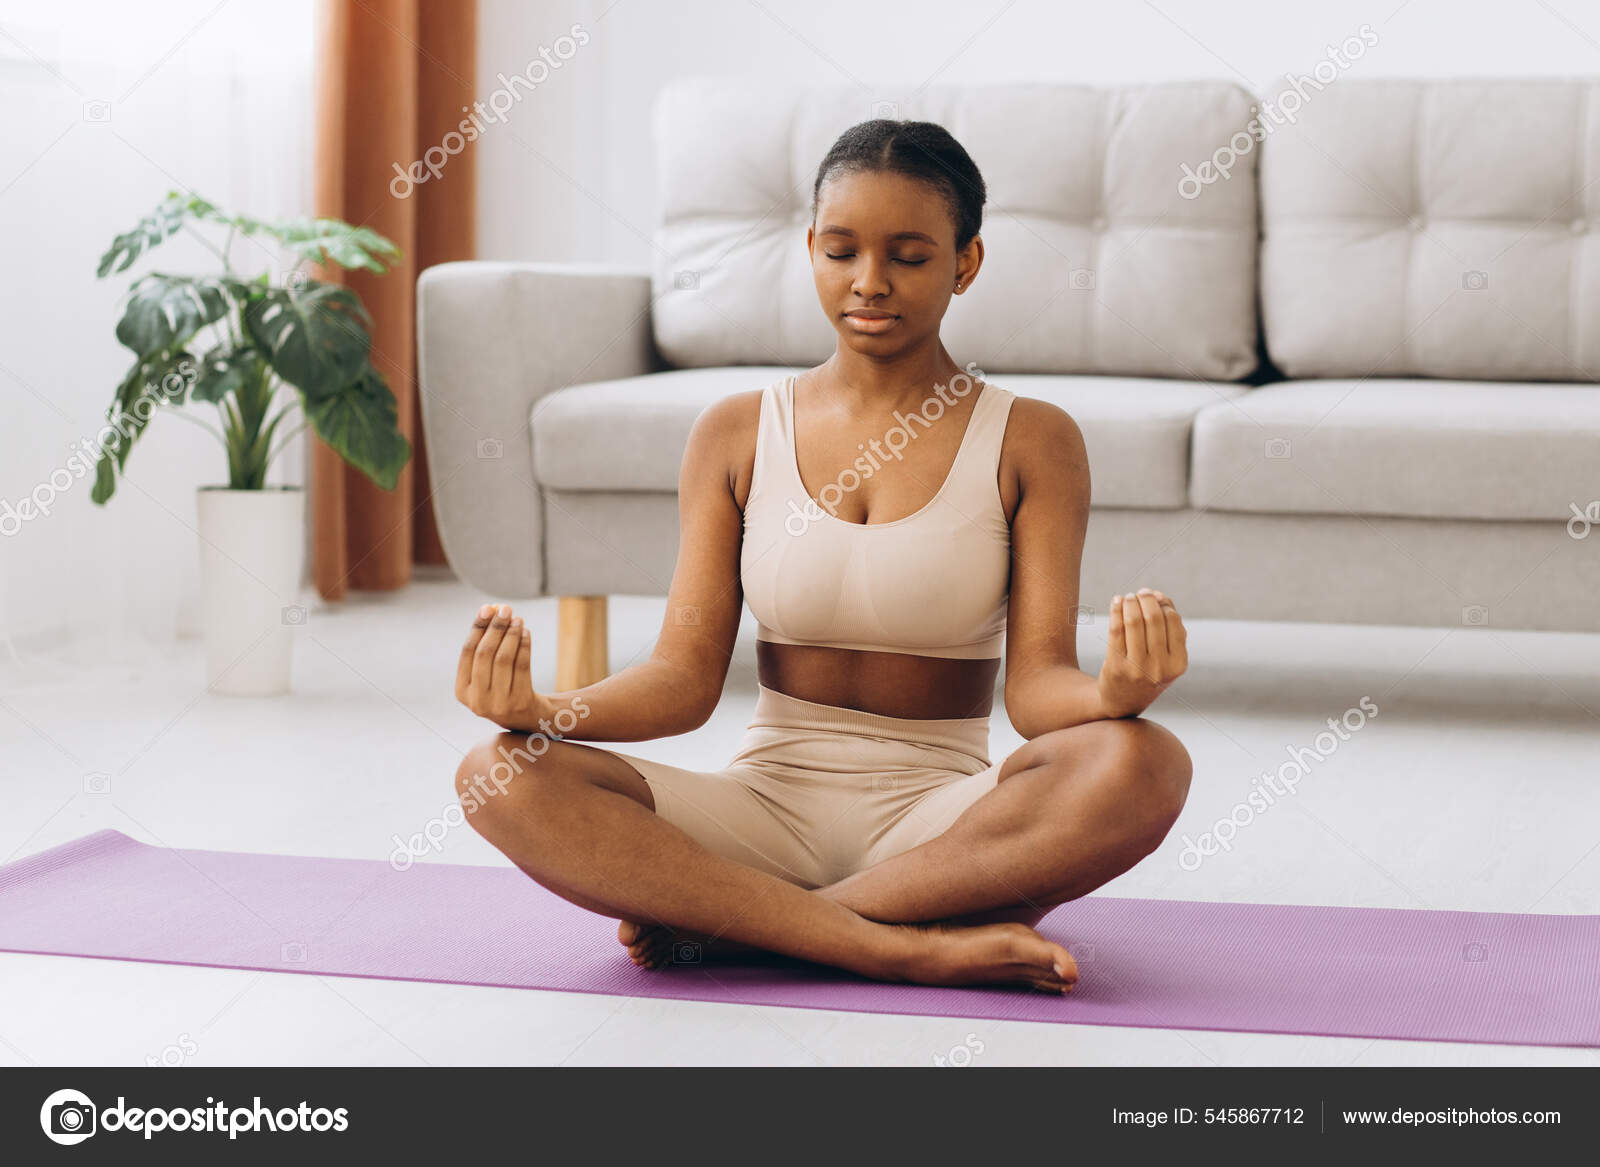 https://st.depositphotos.com/9045224/54586/i/1600/depositphotos_545867712-stock-photo-young-black-woman-meditating-home.jpg